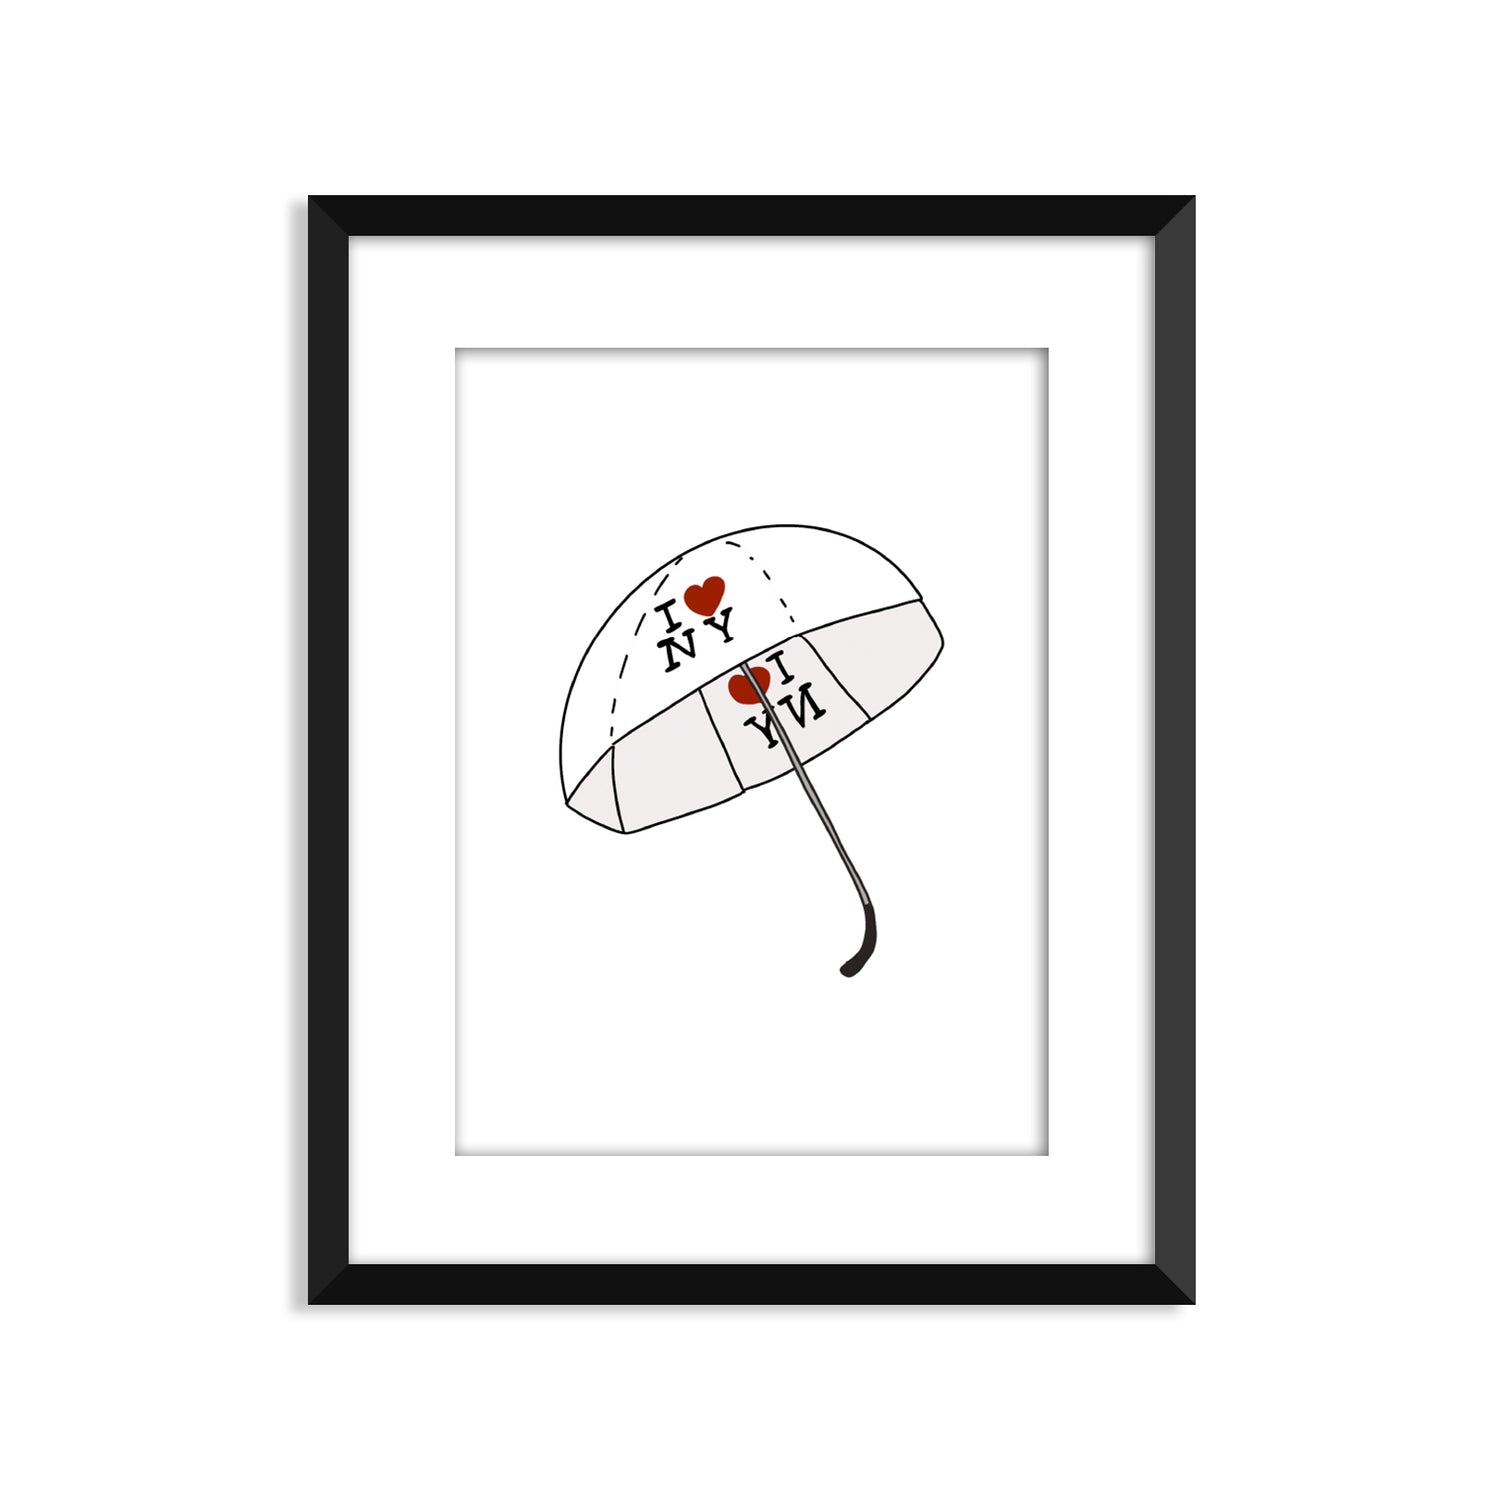 Around New York Umbrella - Unframed Art Print Or Greeting Card